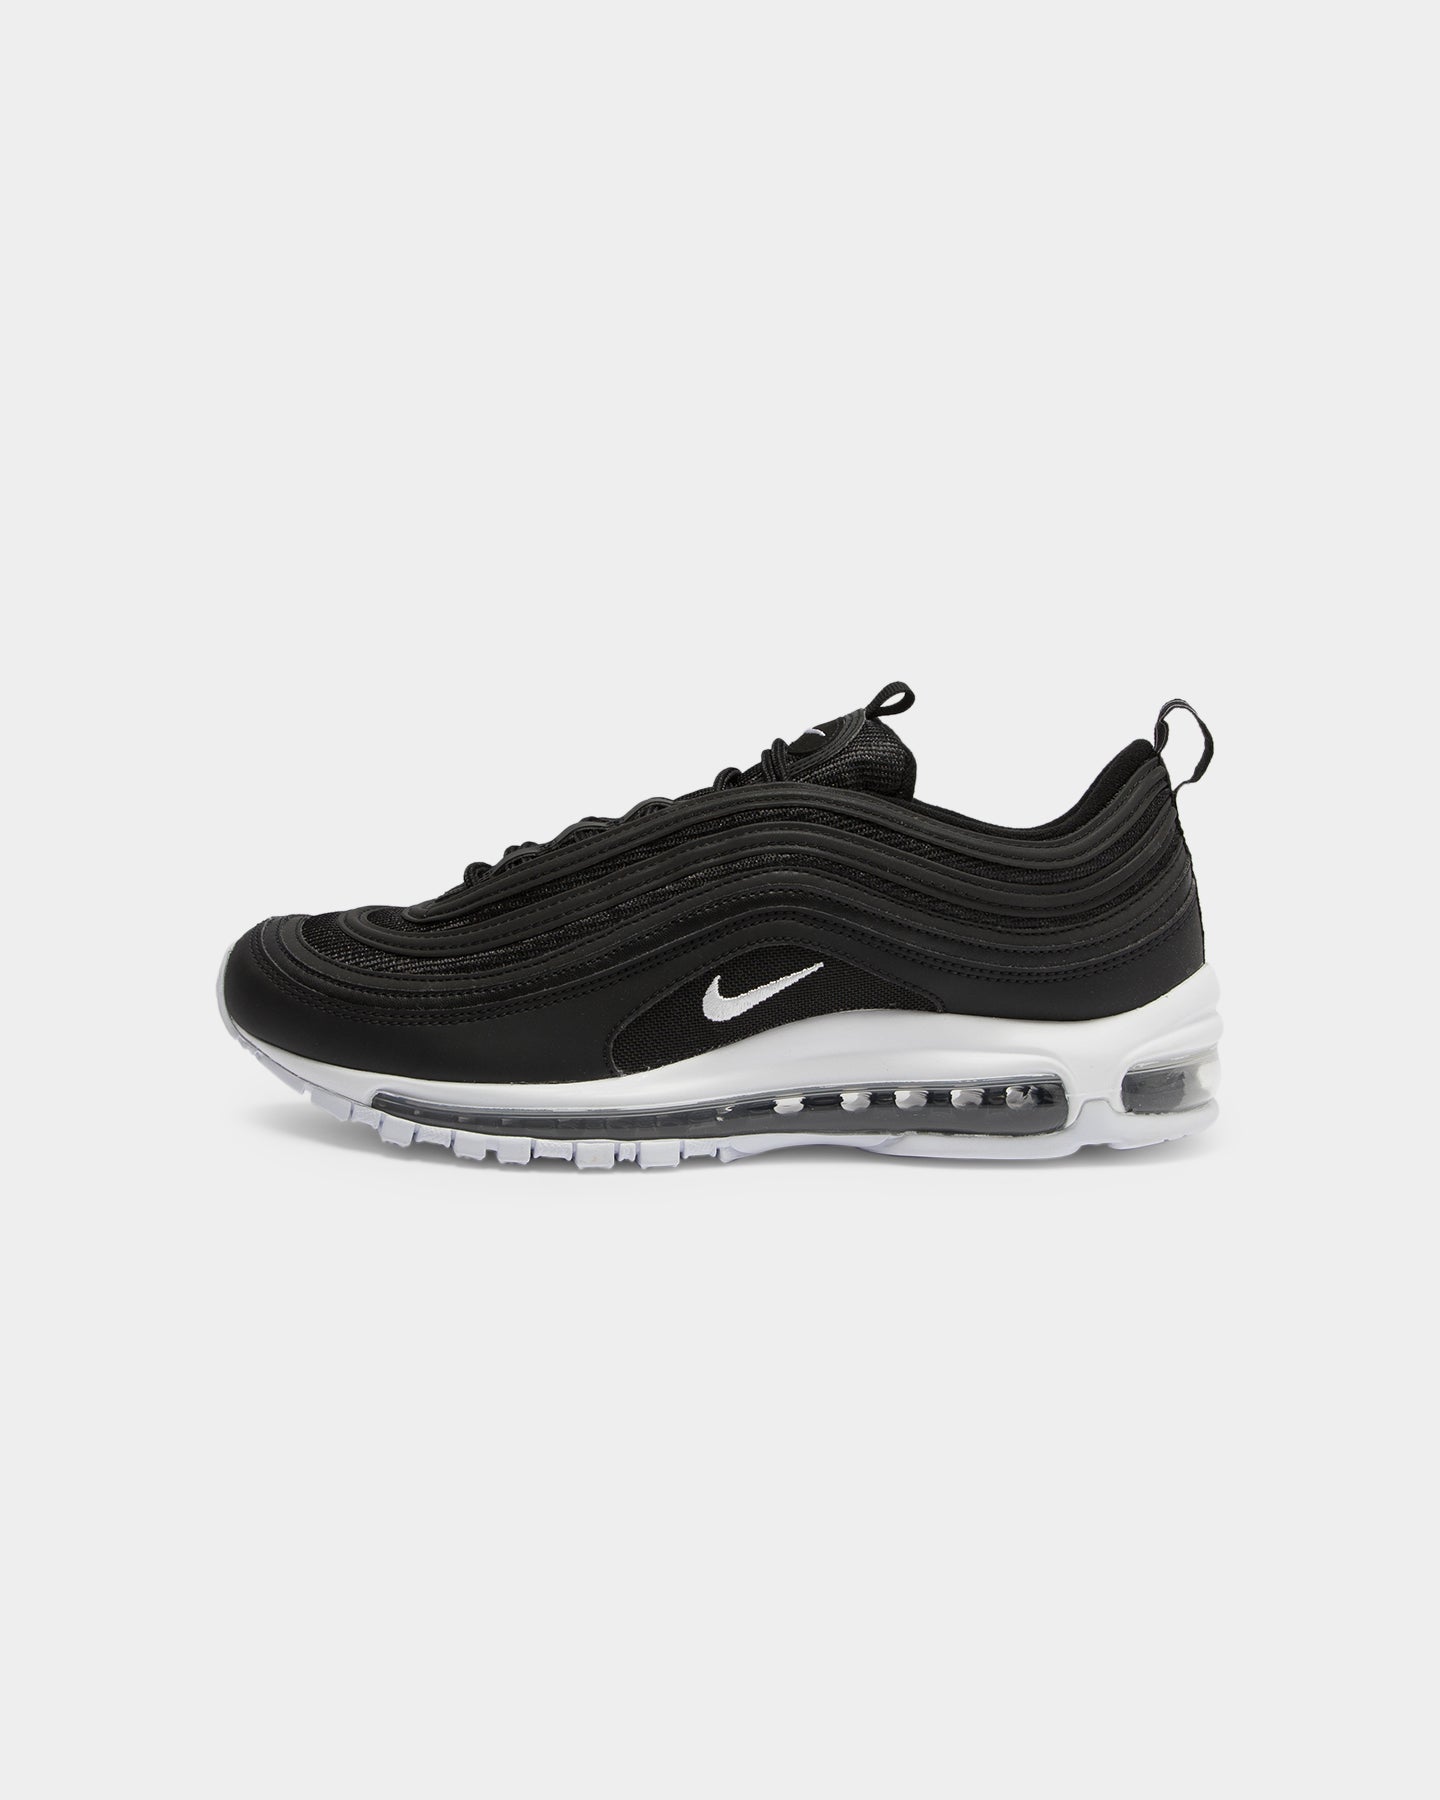 Nike Air Max '97 Shoe Black/White 